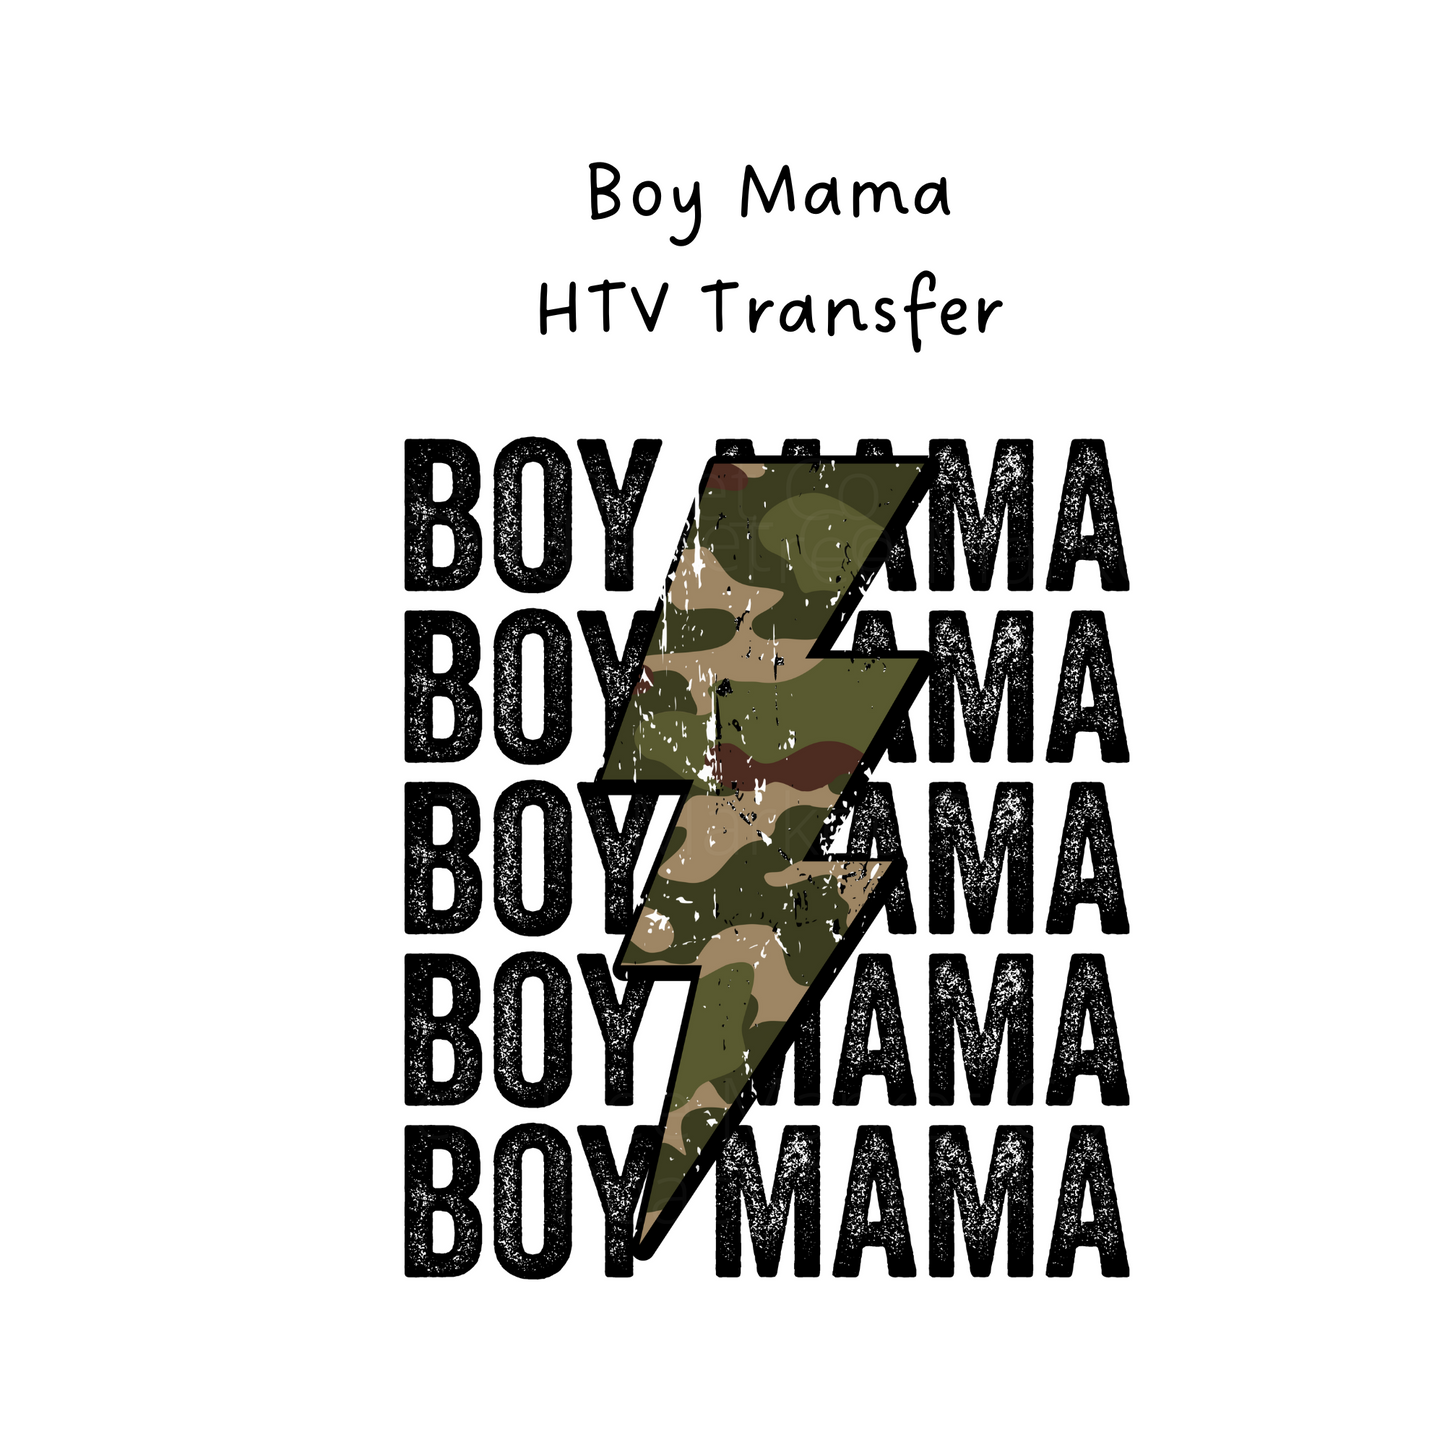 Boy Mama HTV Transfer